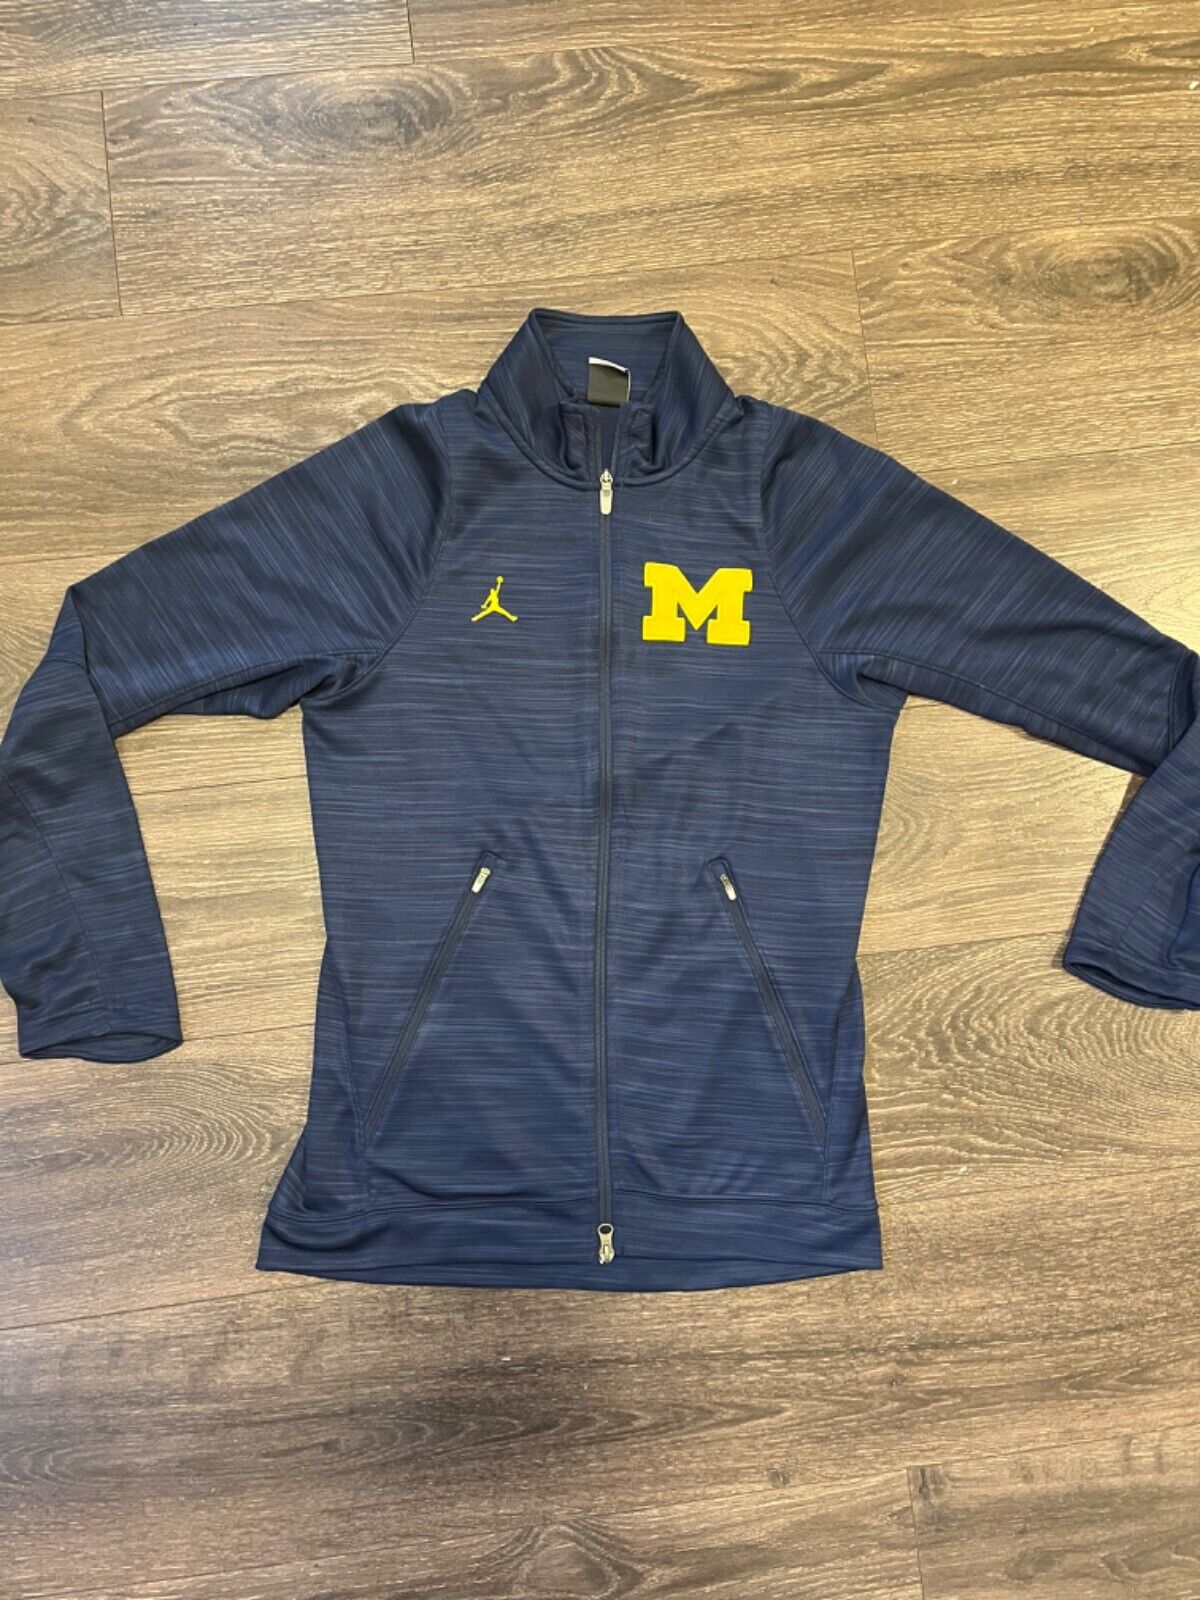 Player Exclusive University of Michigan Jordan Brand Jacket, Small